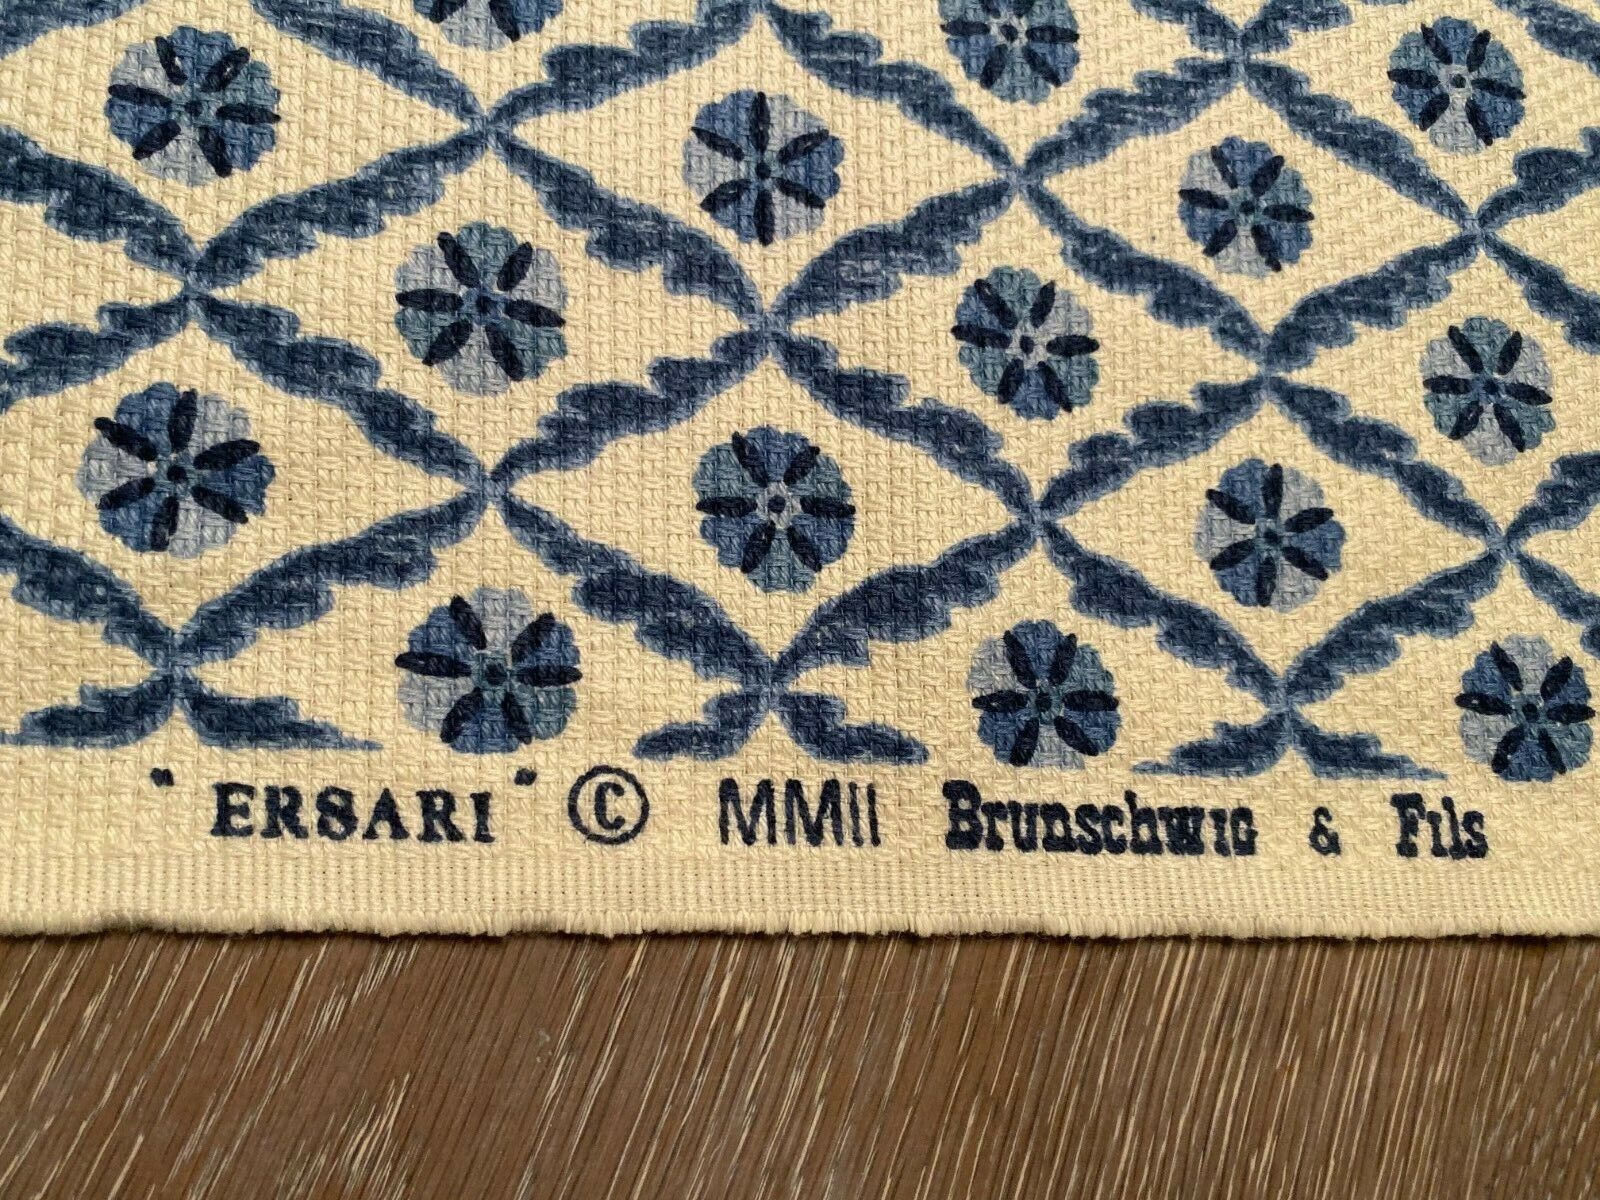 Brunschwig & Fils Ersari Fabric Blue and White Cotton Suzani 1 Yard  55